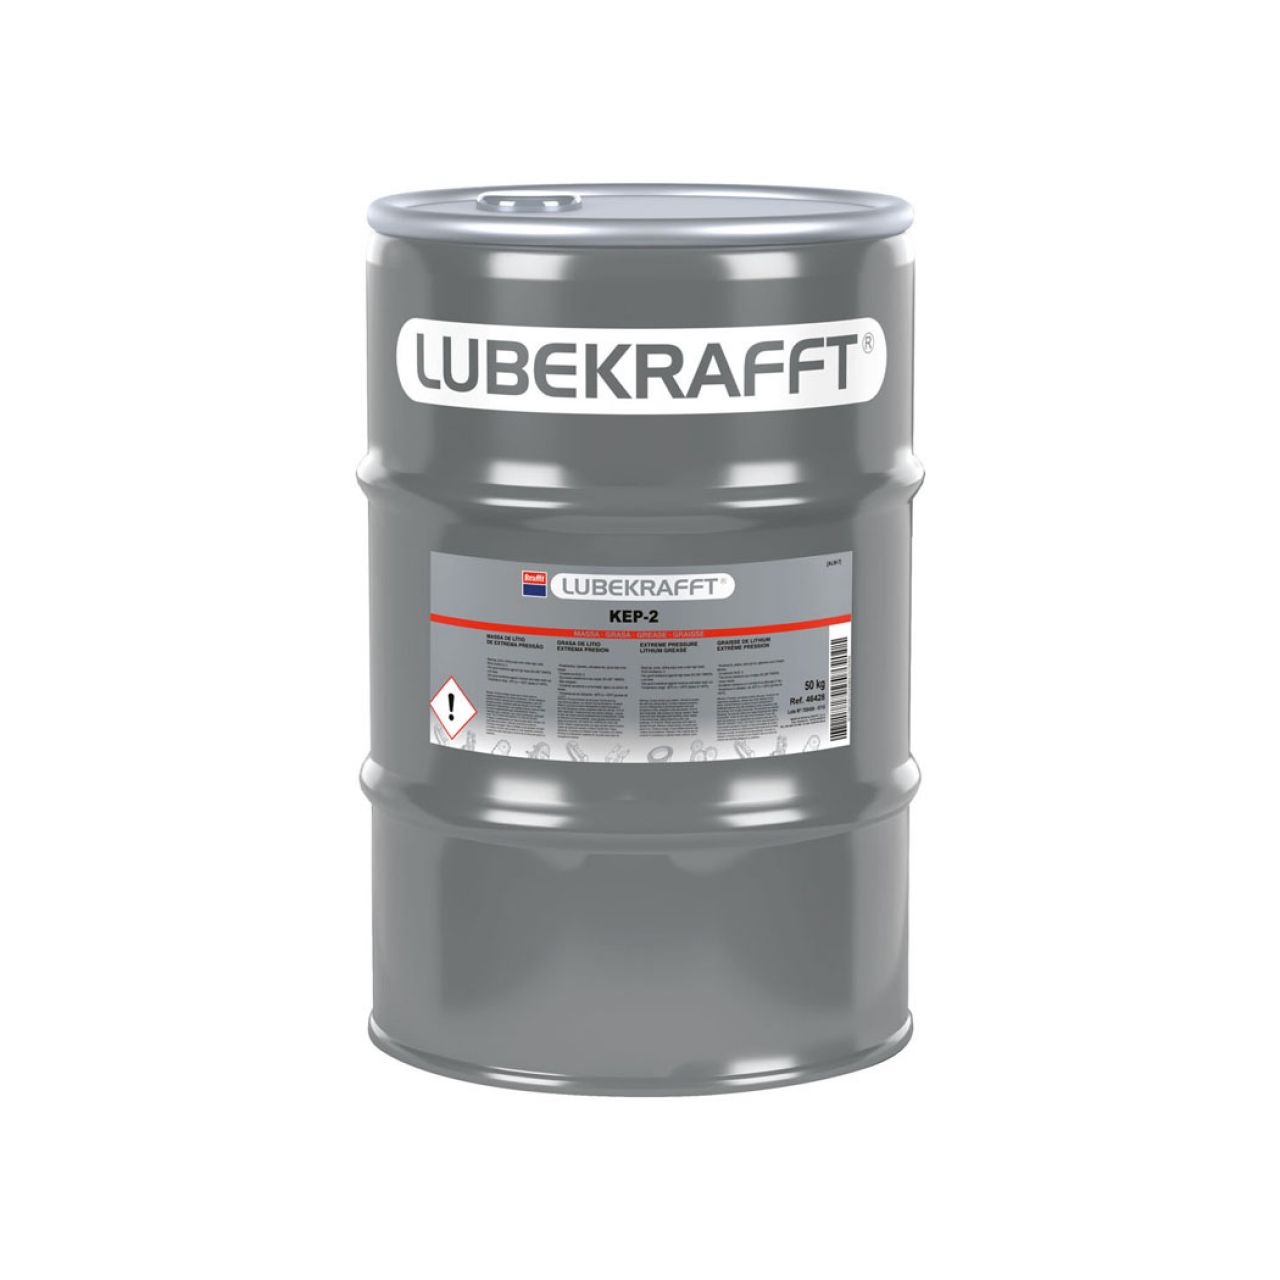 Lubekrafft® KEP - Grasa Multifuncional de Litio 50 kg Marrón claro. KEP-2